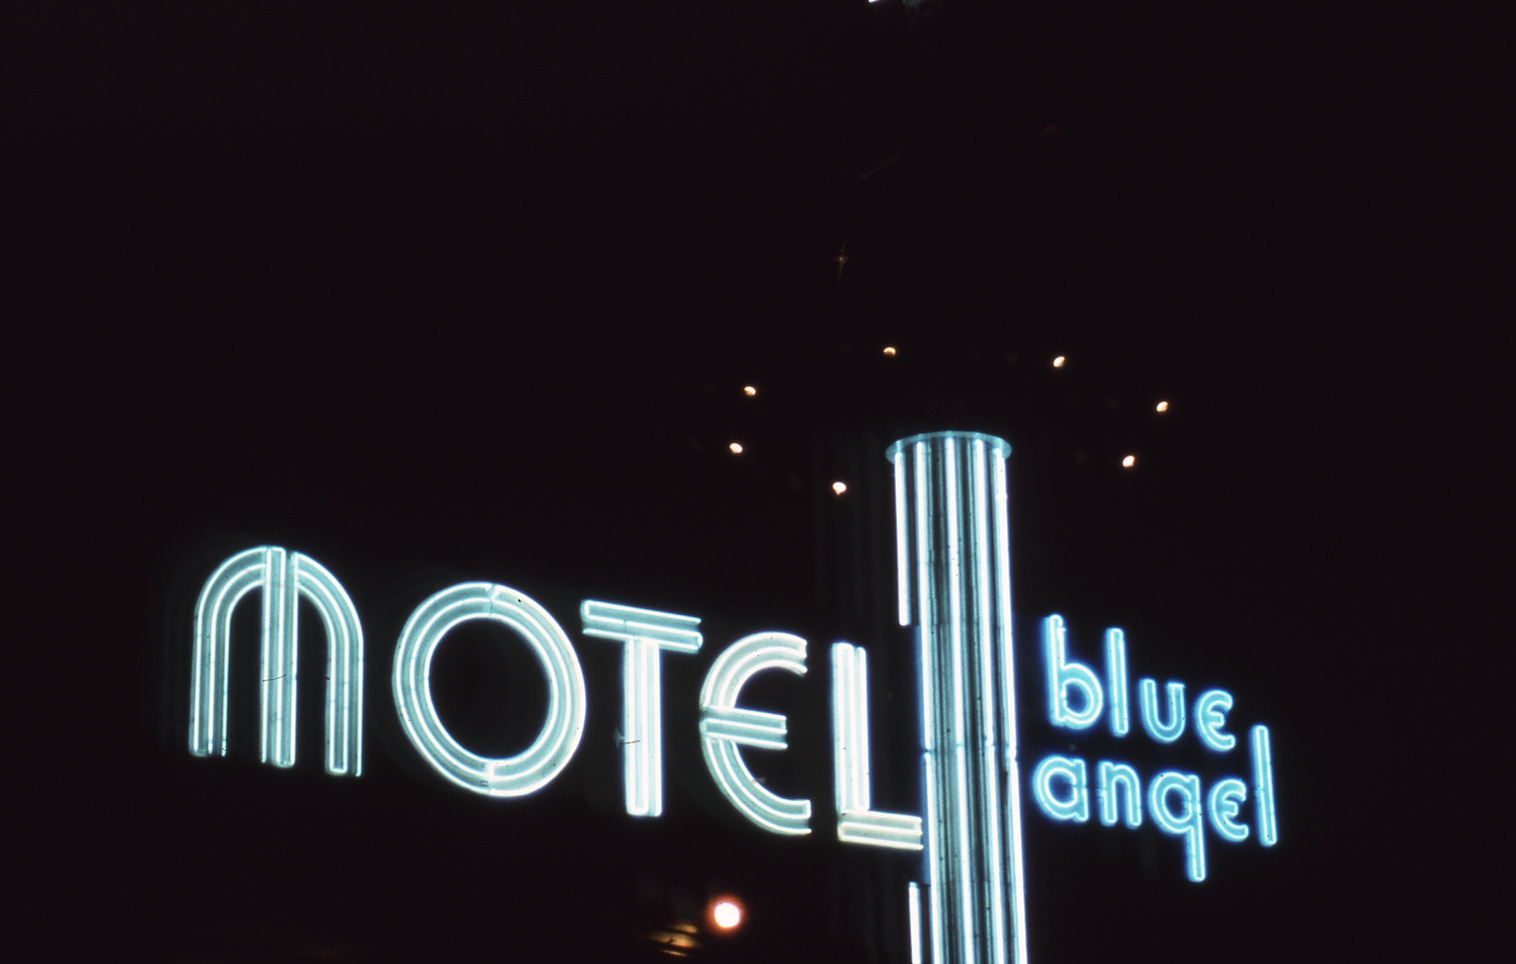 Blue Angel Motel roof mounted sign, Las Vegas, Nevada: photographic print